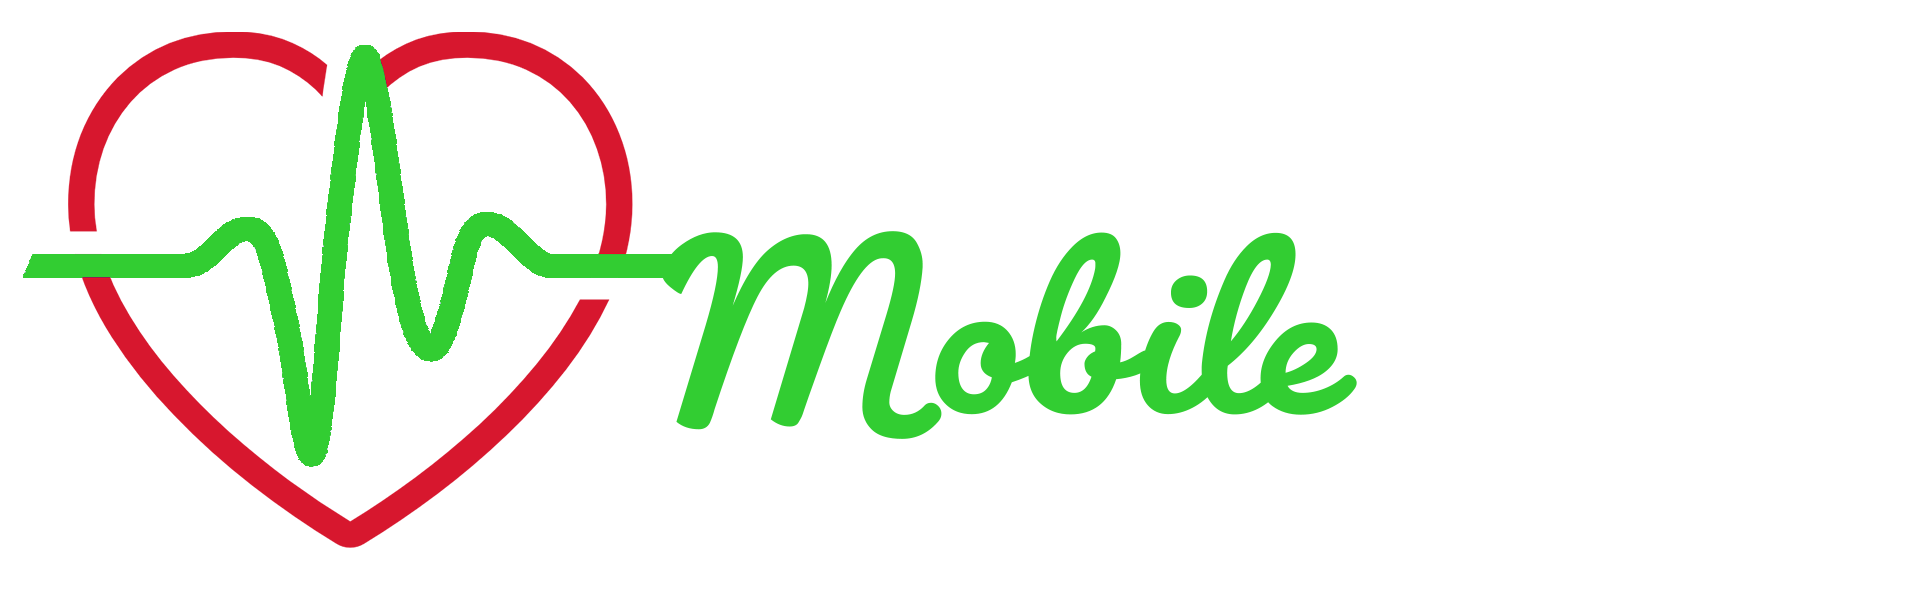 Mobile Home Health Inc homepage